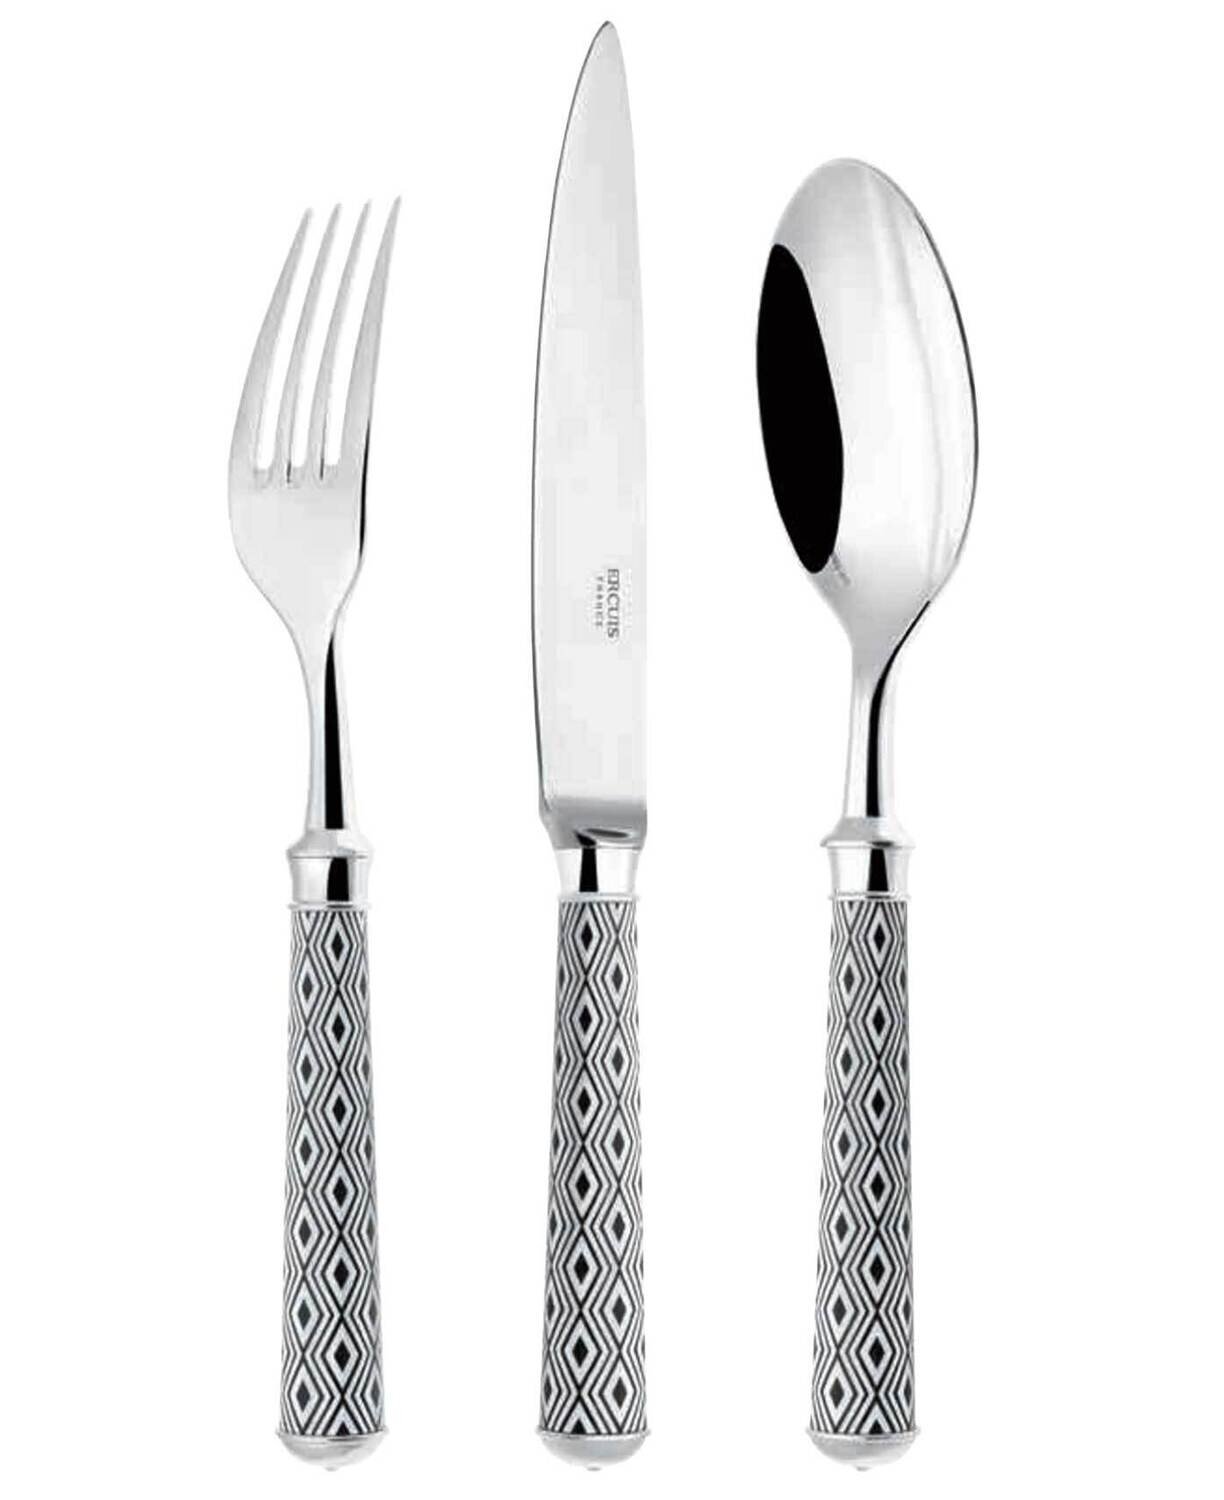 Ercuis Arlequin Beige Dessert Spoon 7.375 Inch Silver Plated F600549-04